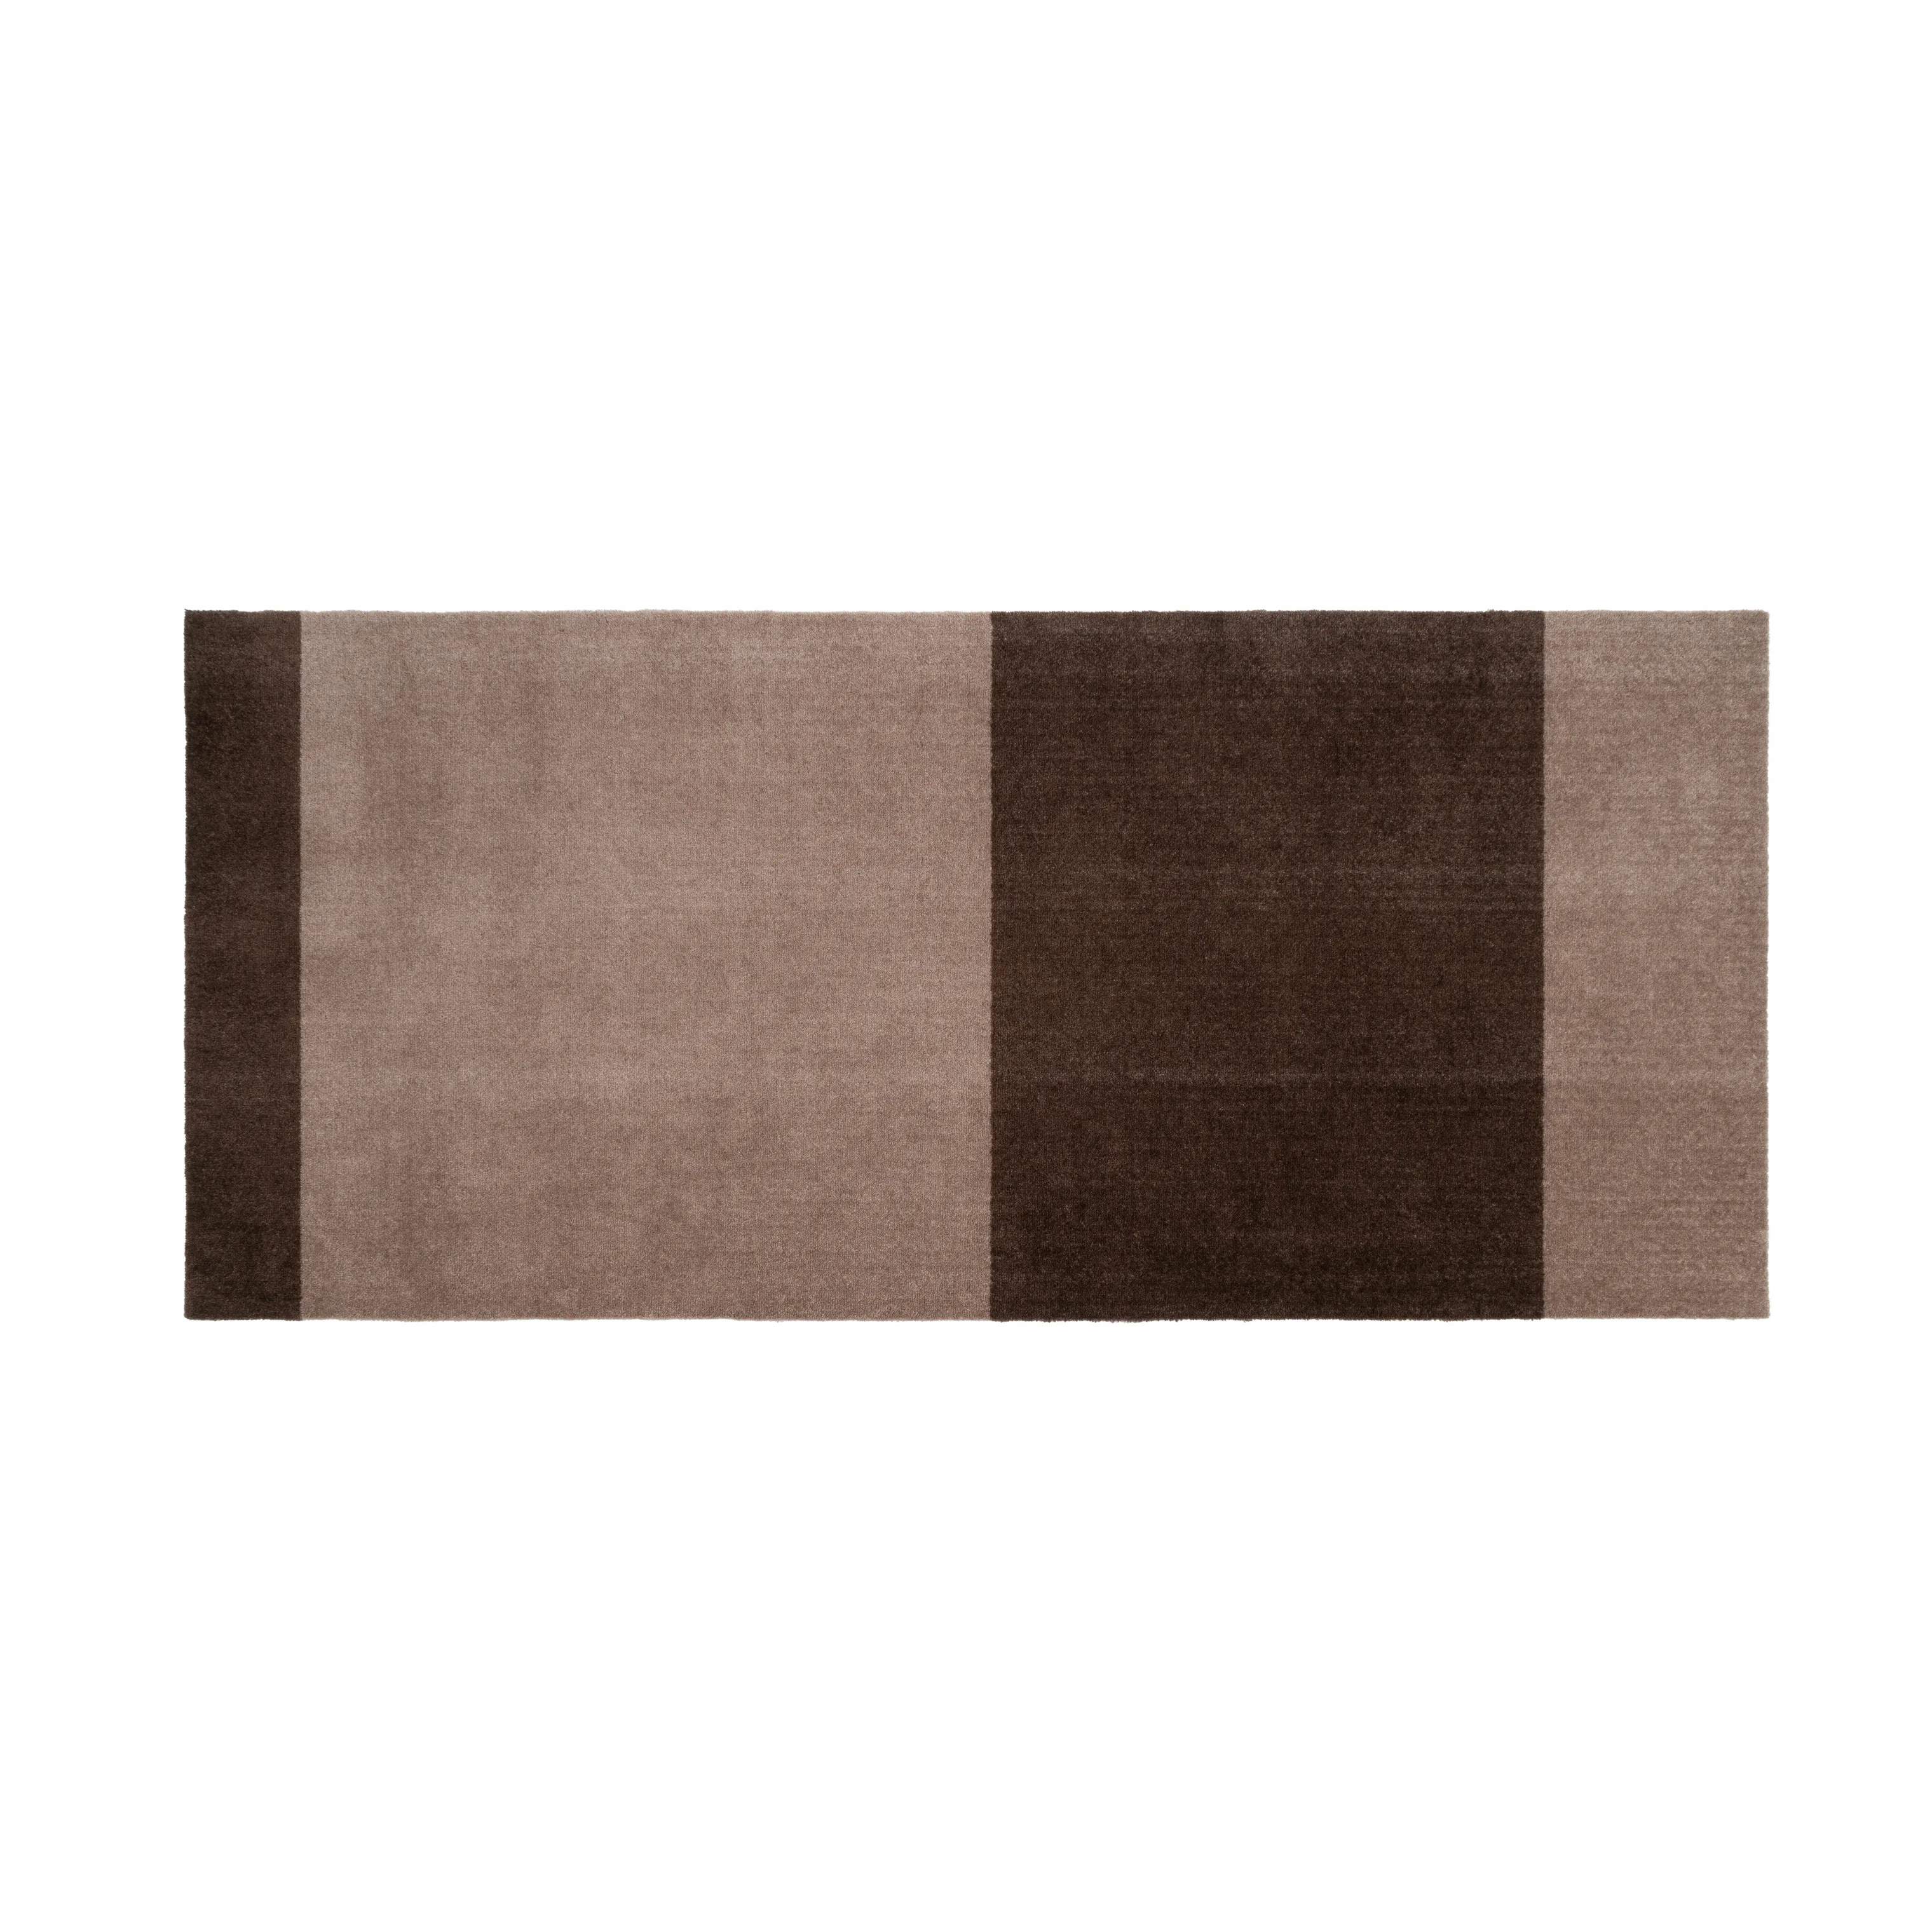 Stripes Horisontal Gulvtæppe, sand/brun, large